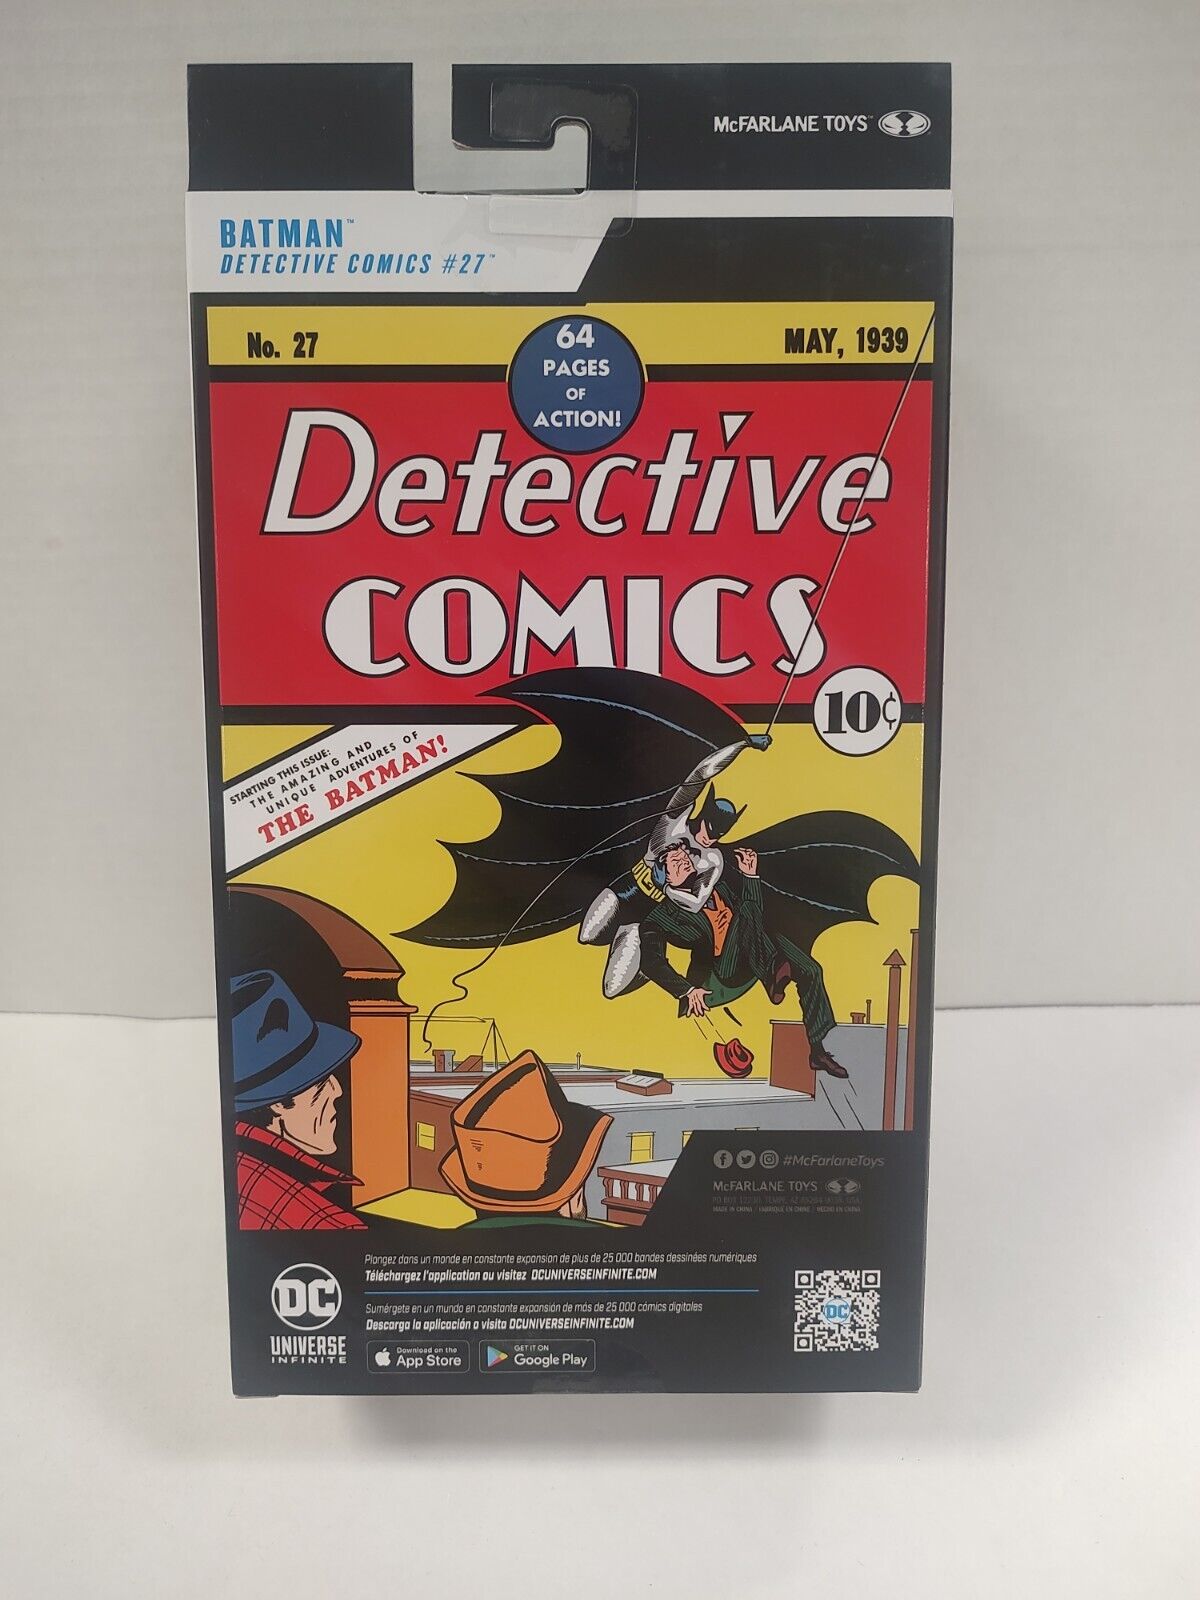 McFarlane Toys Batman Detective Comics #27 Platinum Edition